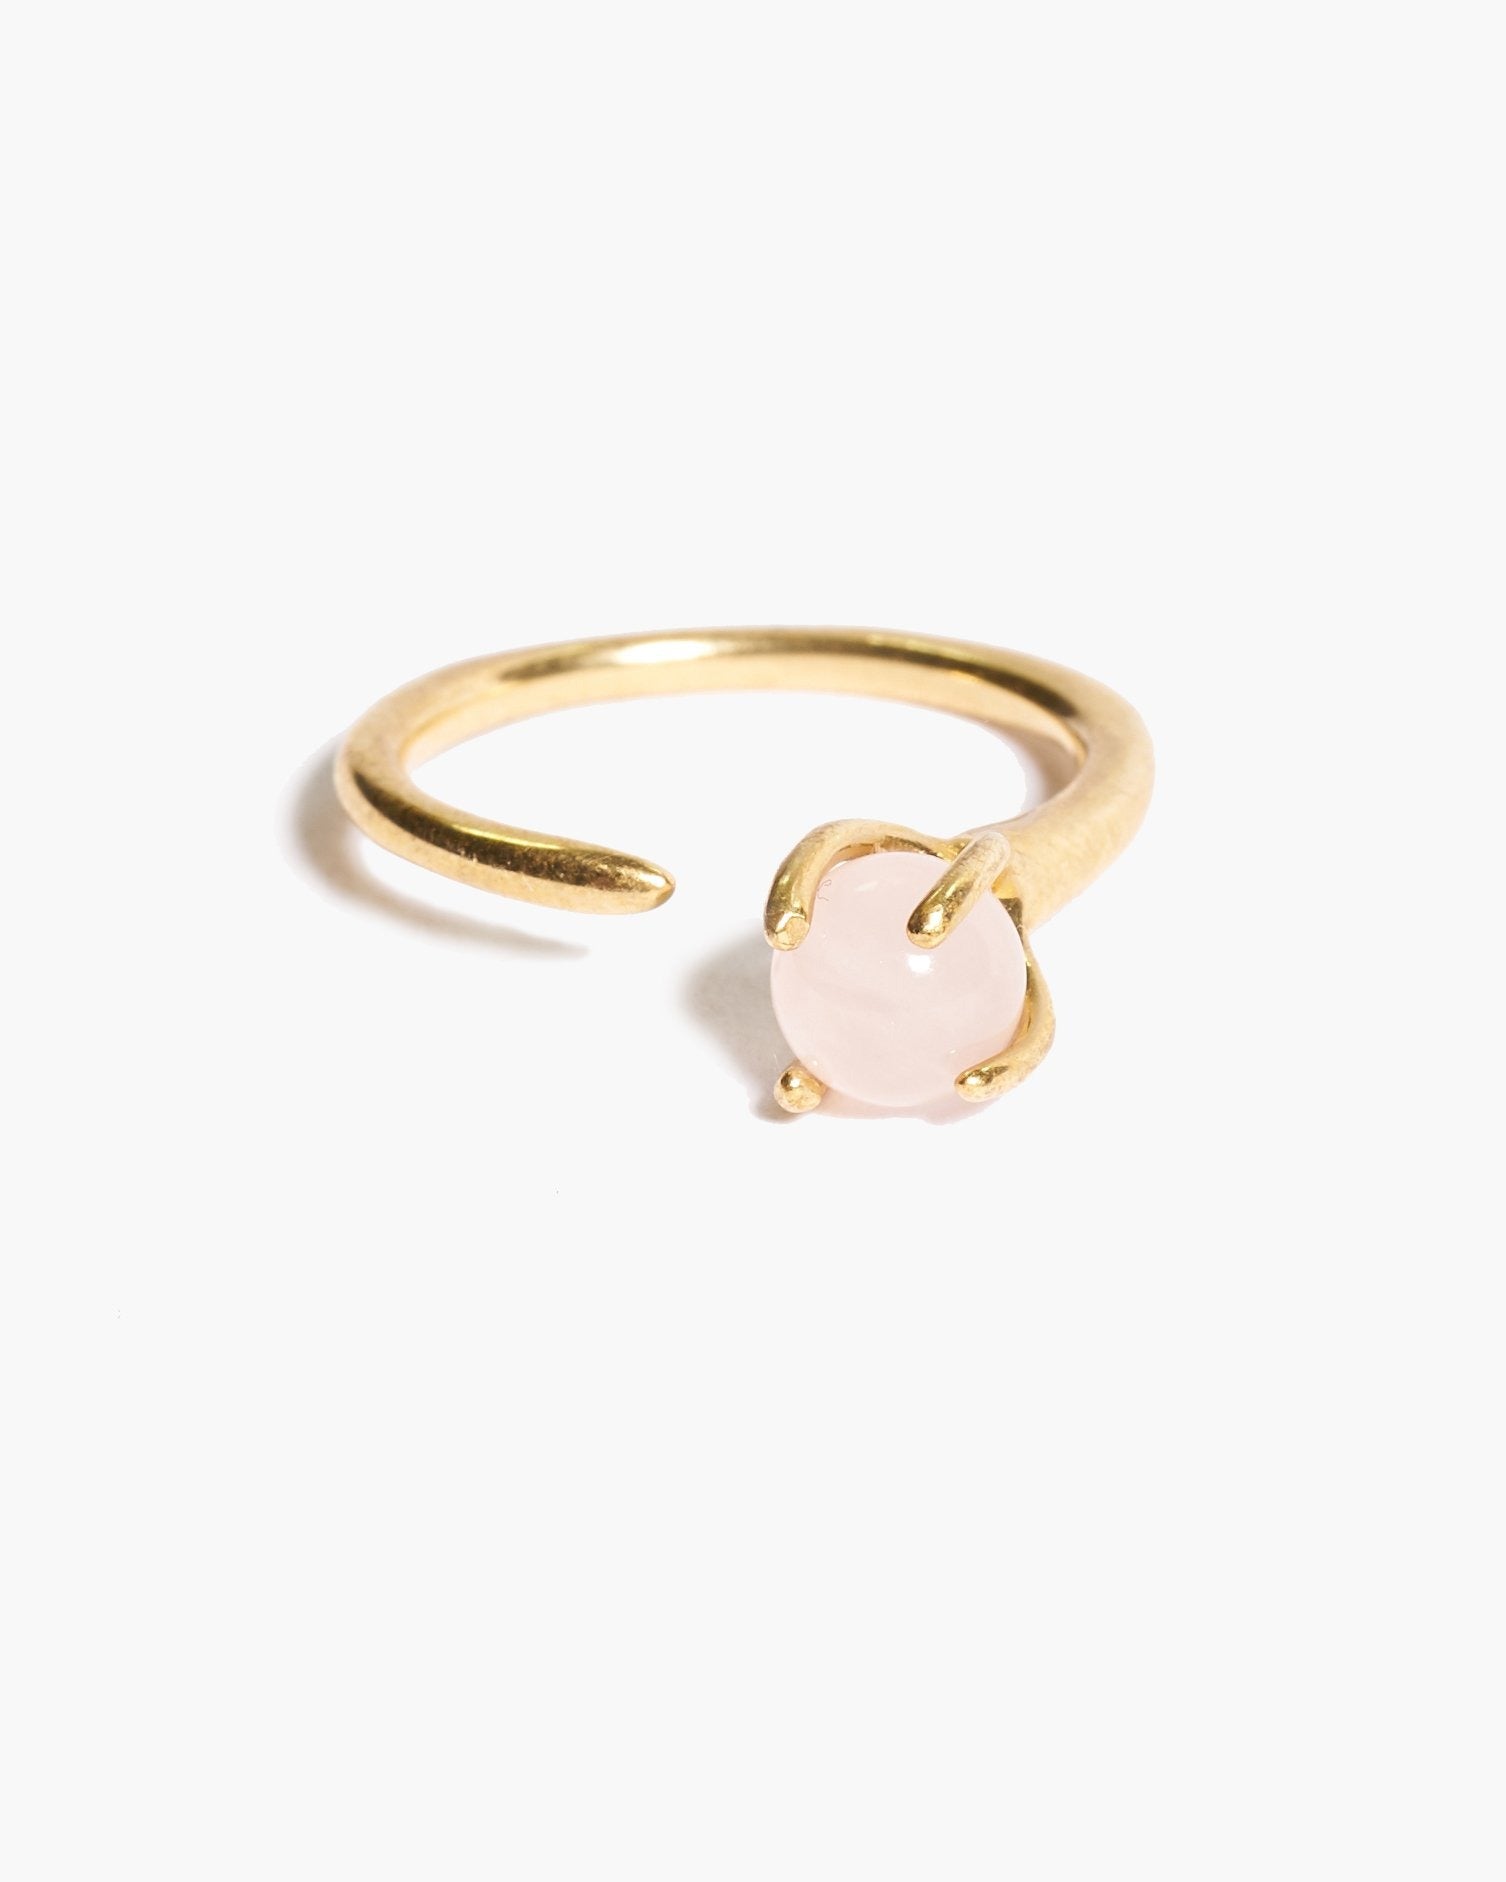 Odette Klint Ring in Brass with Rose Quartz